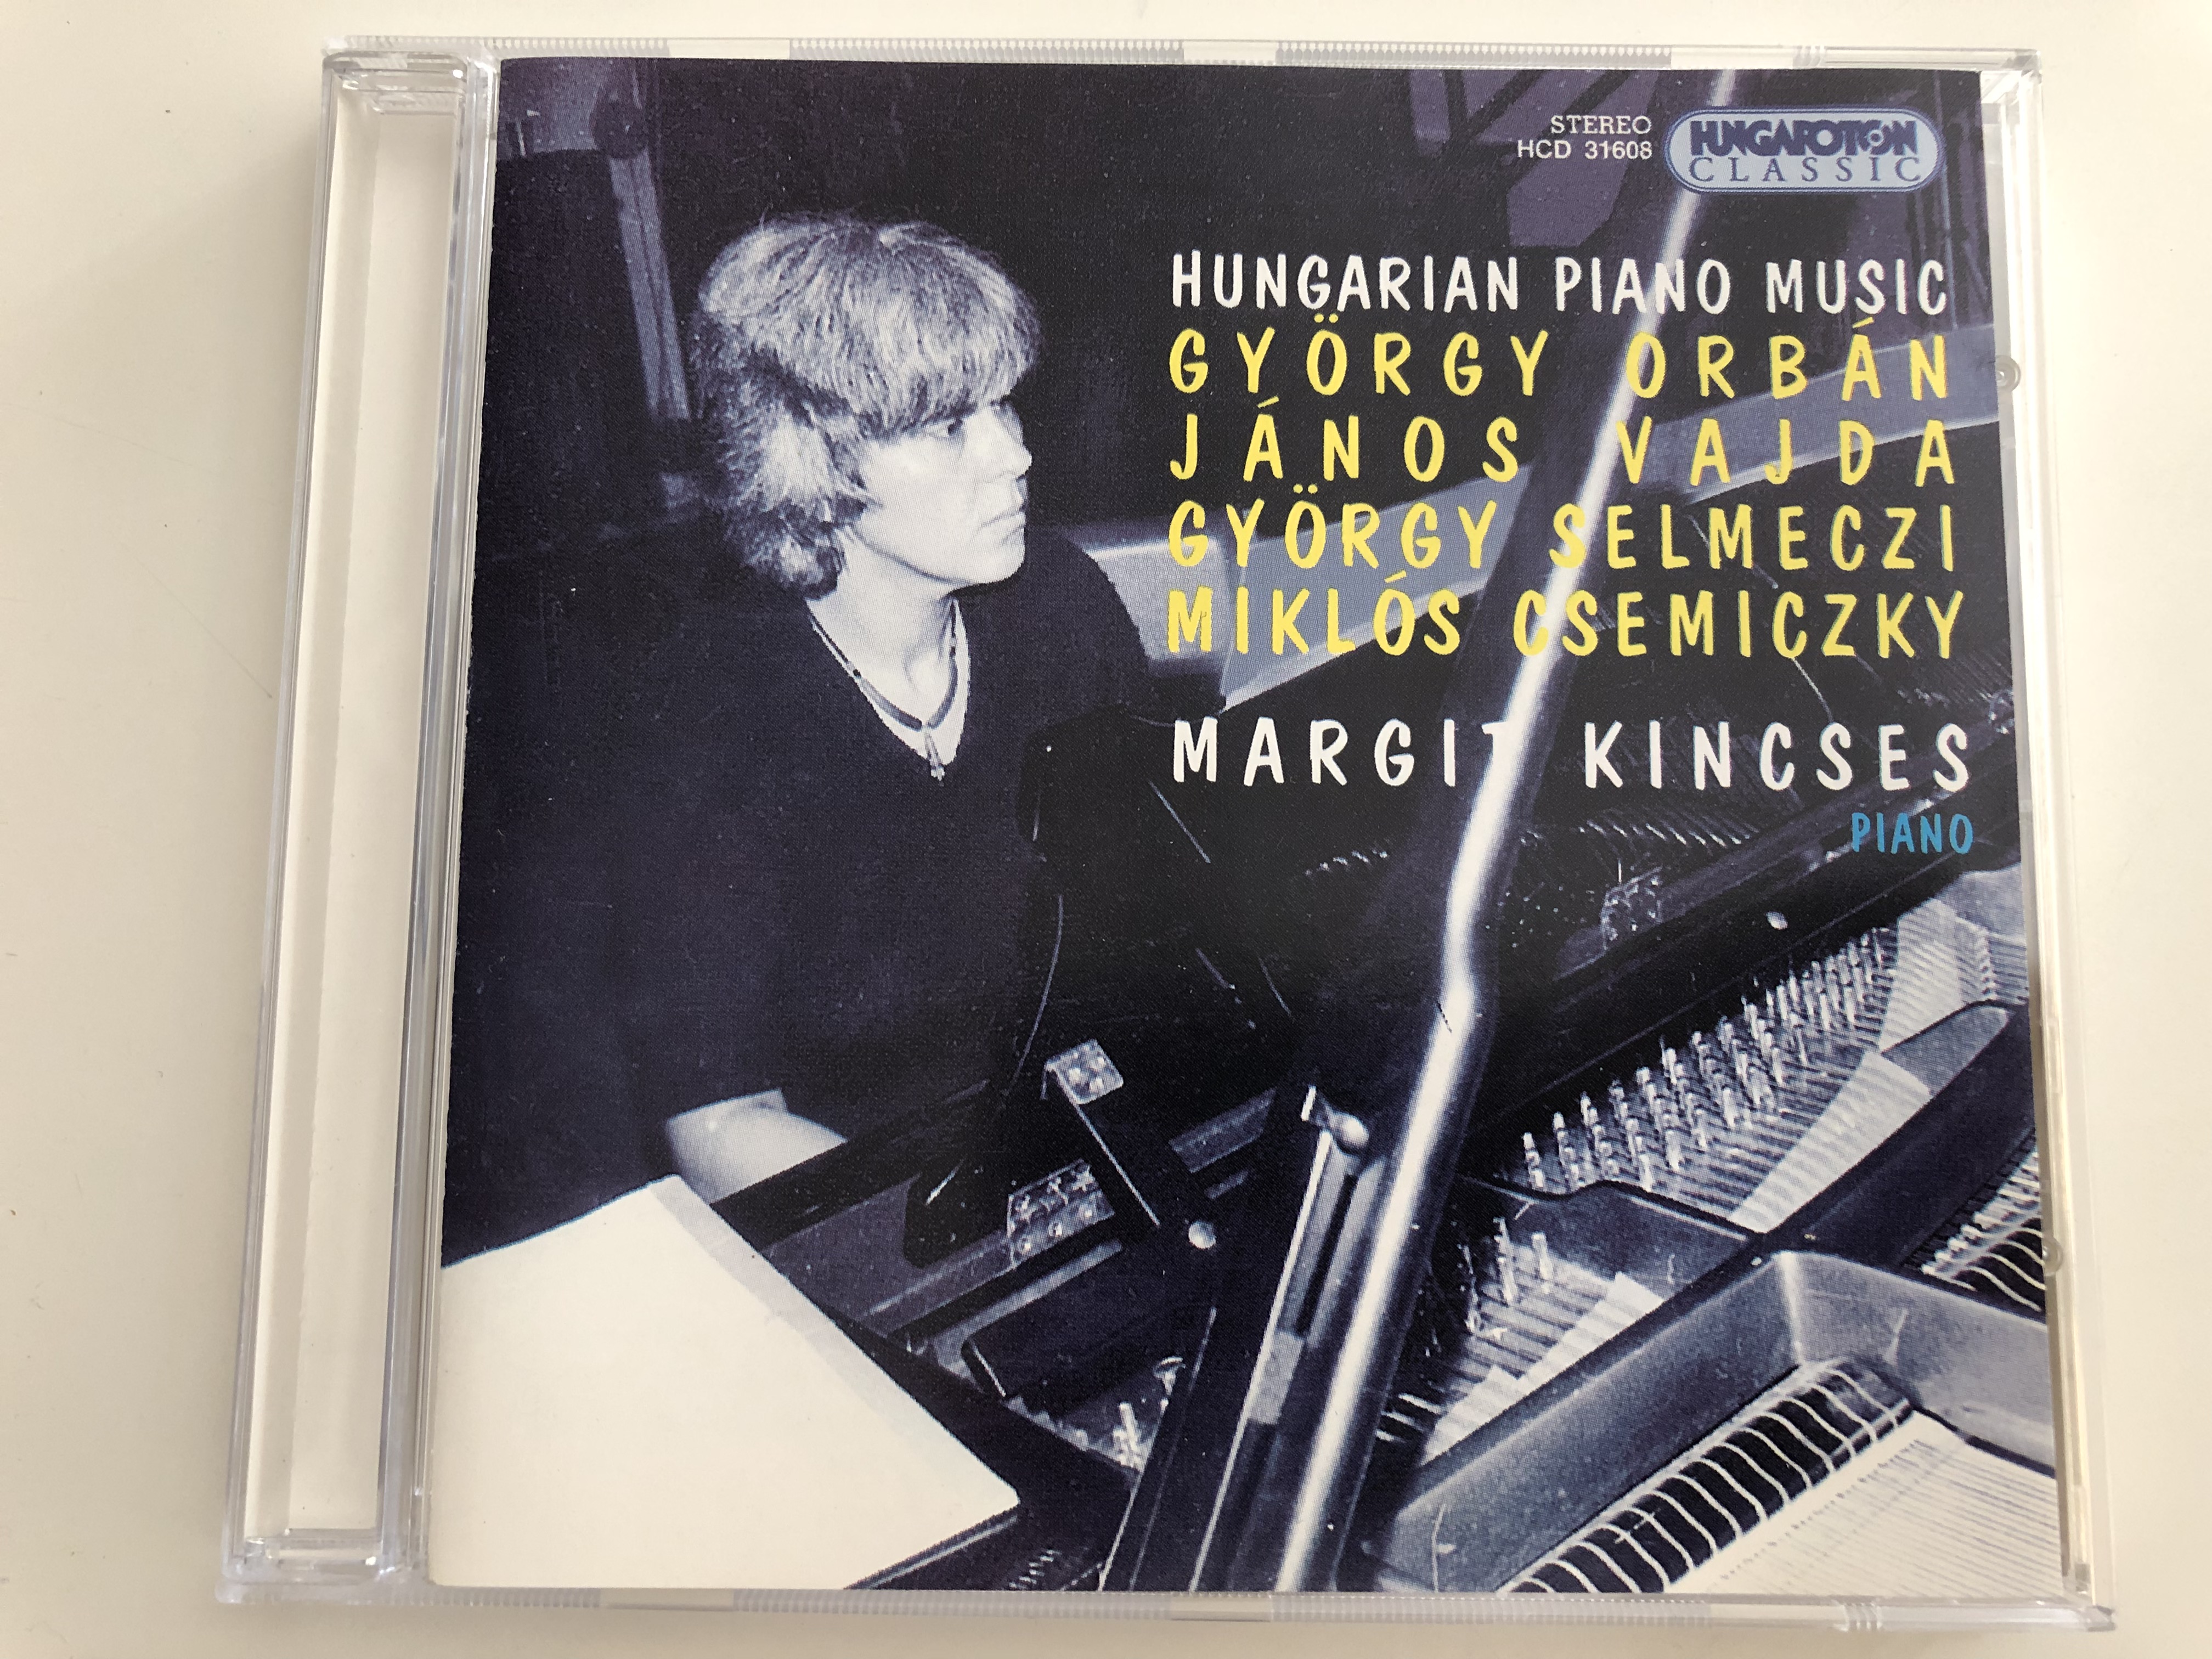 hungarian-piano-music-gy-rgy-orb-n-j-nos-vajda-gy-rgy-selmeczi-mikl-s-csemiczky-margit-kincses-piano-hungaroton-classic-audio-cd-1994-hcd-31608-1-.jpg